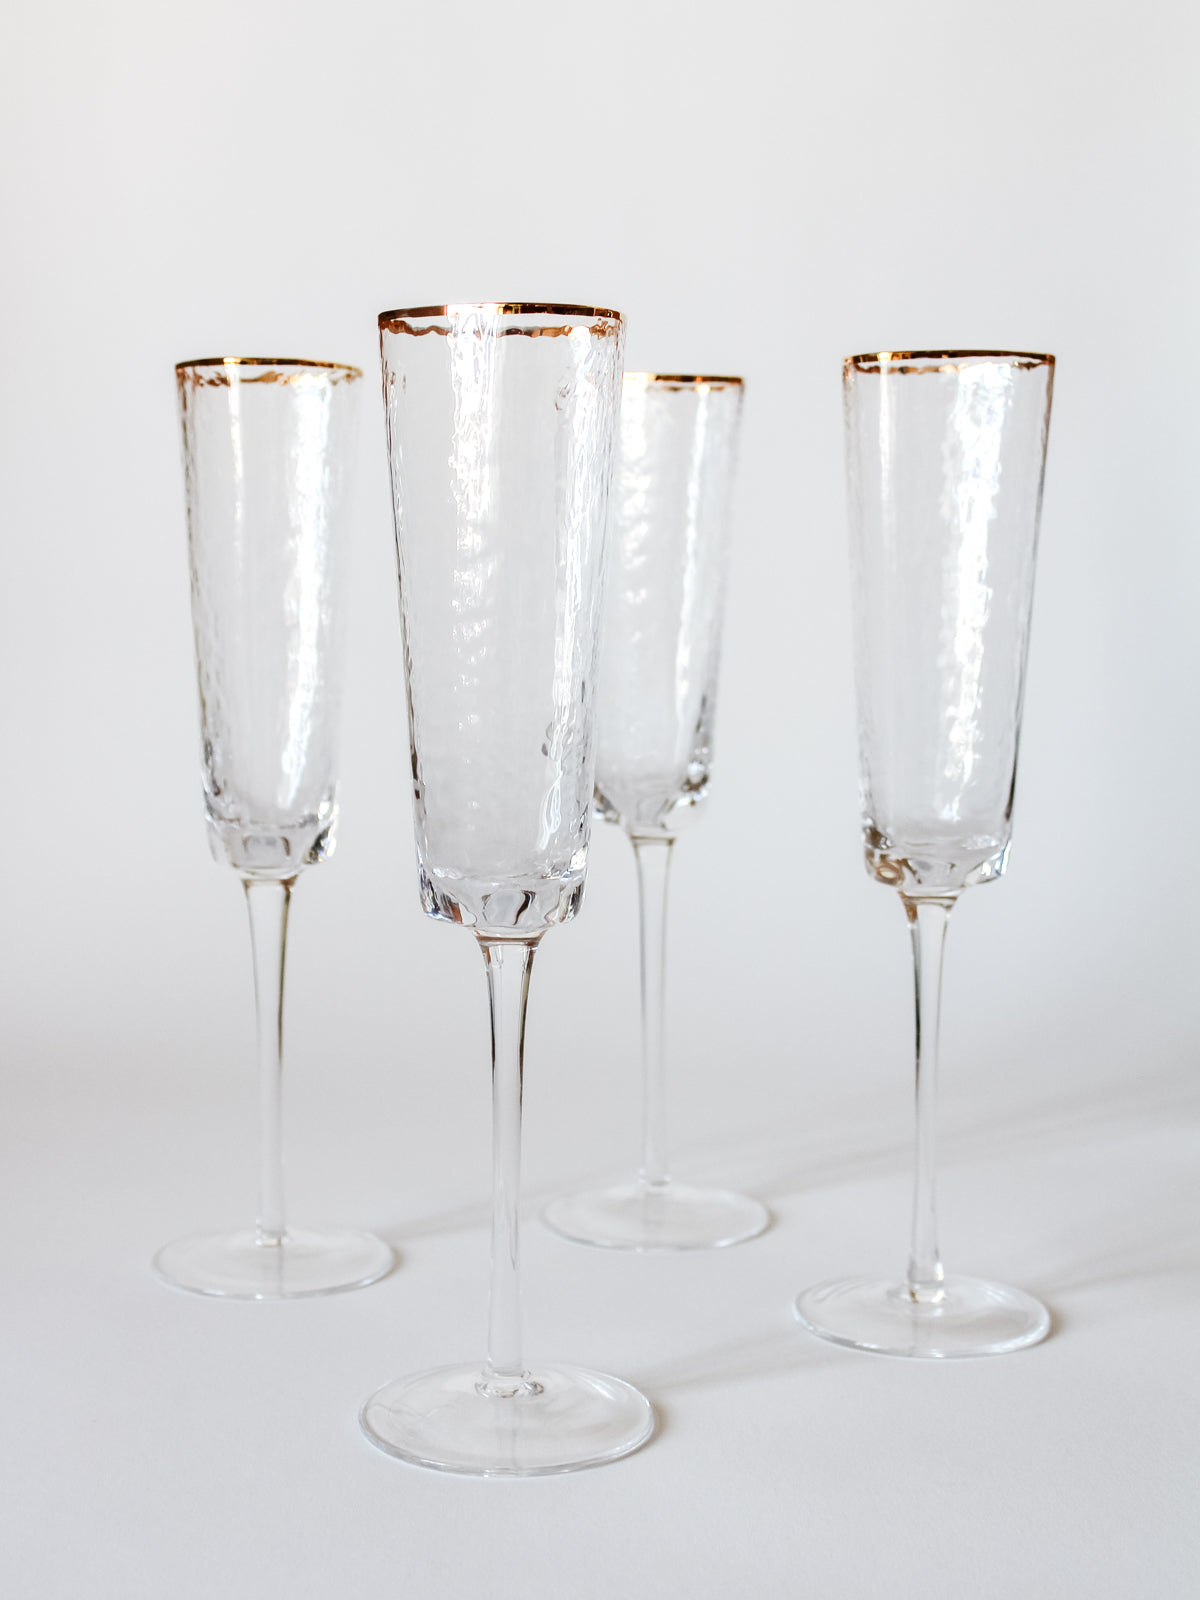 Triangular Gold Champagne Flutes, Set of 4